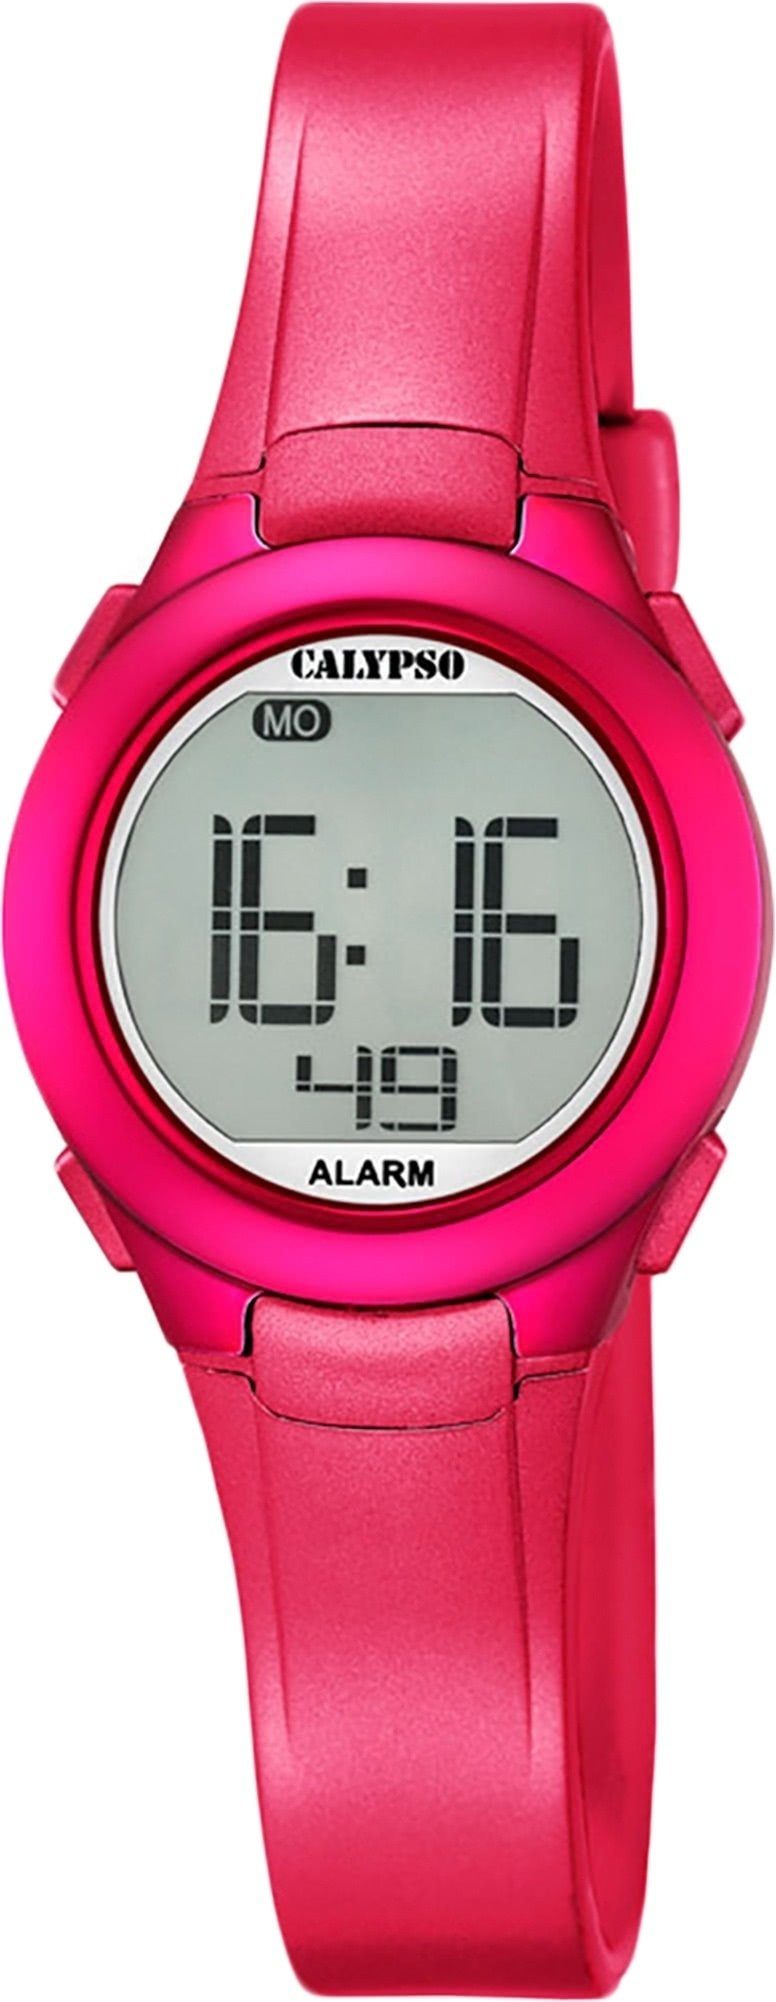 rund, pink, PURarmband Damen Kunststoffband, Armbanduhr Sport CALYPSO Uhr Digitaluhr WATCHES Damen Calypso K5677/4